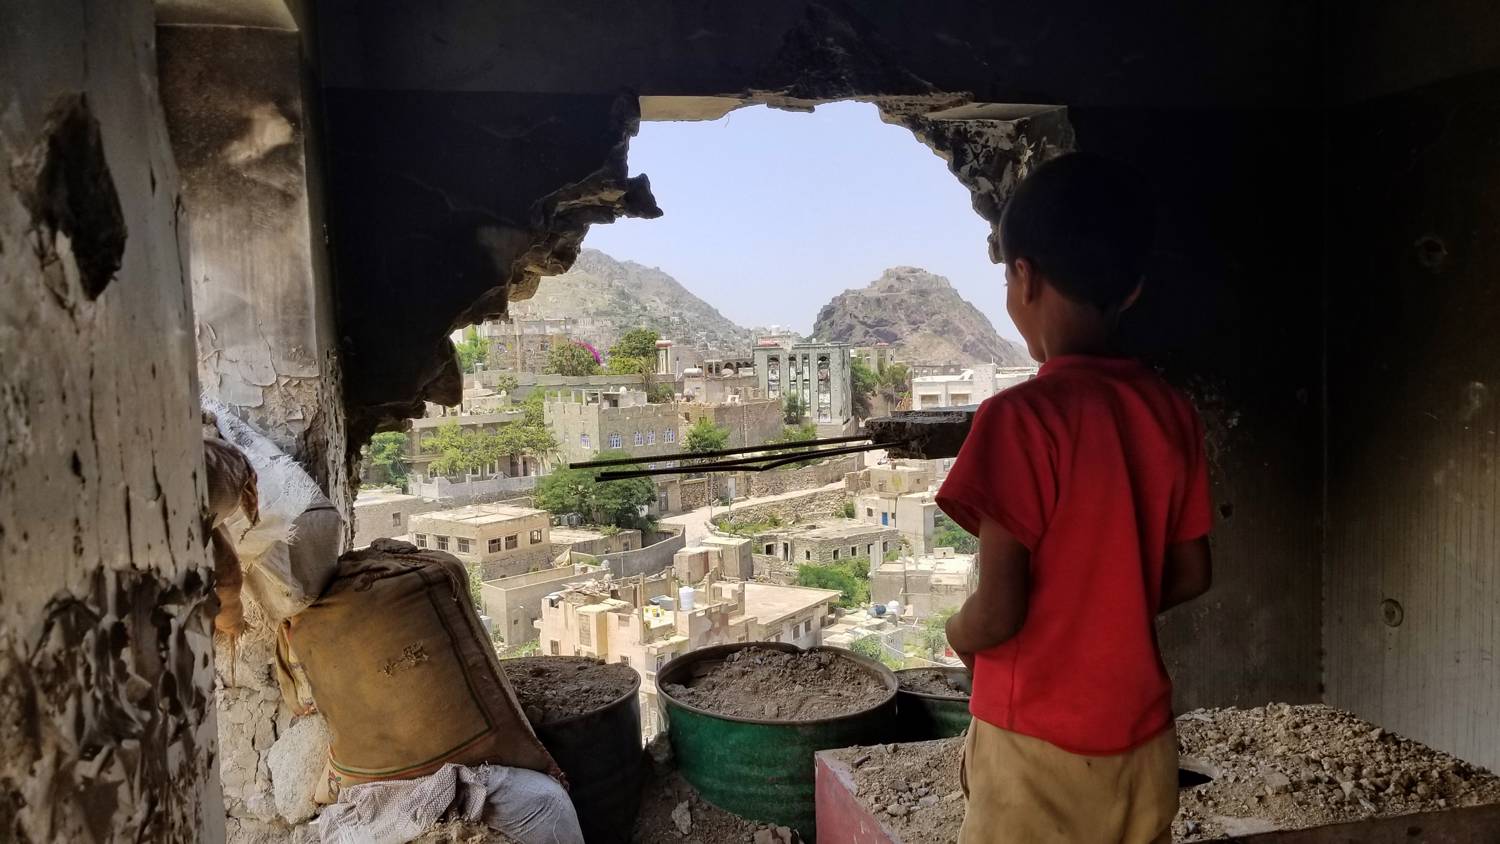 Child inspects their destroyed house due to the war in Yemen. Photo: Copyright (c) 2018 anasalhajj/Shutterstock